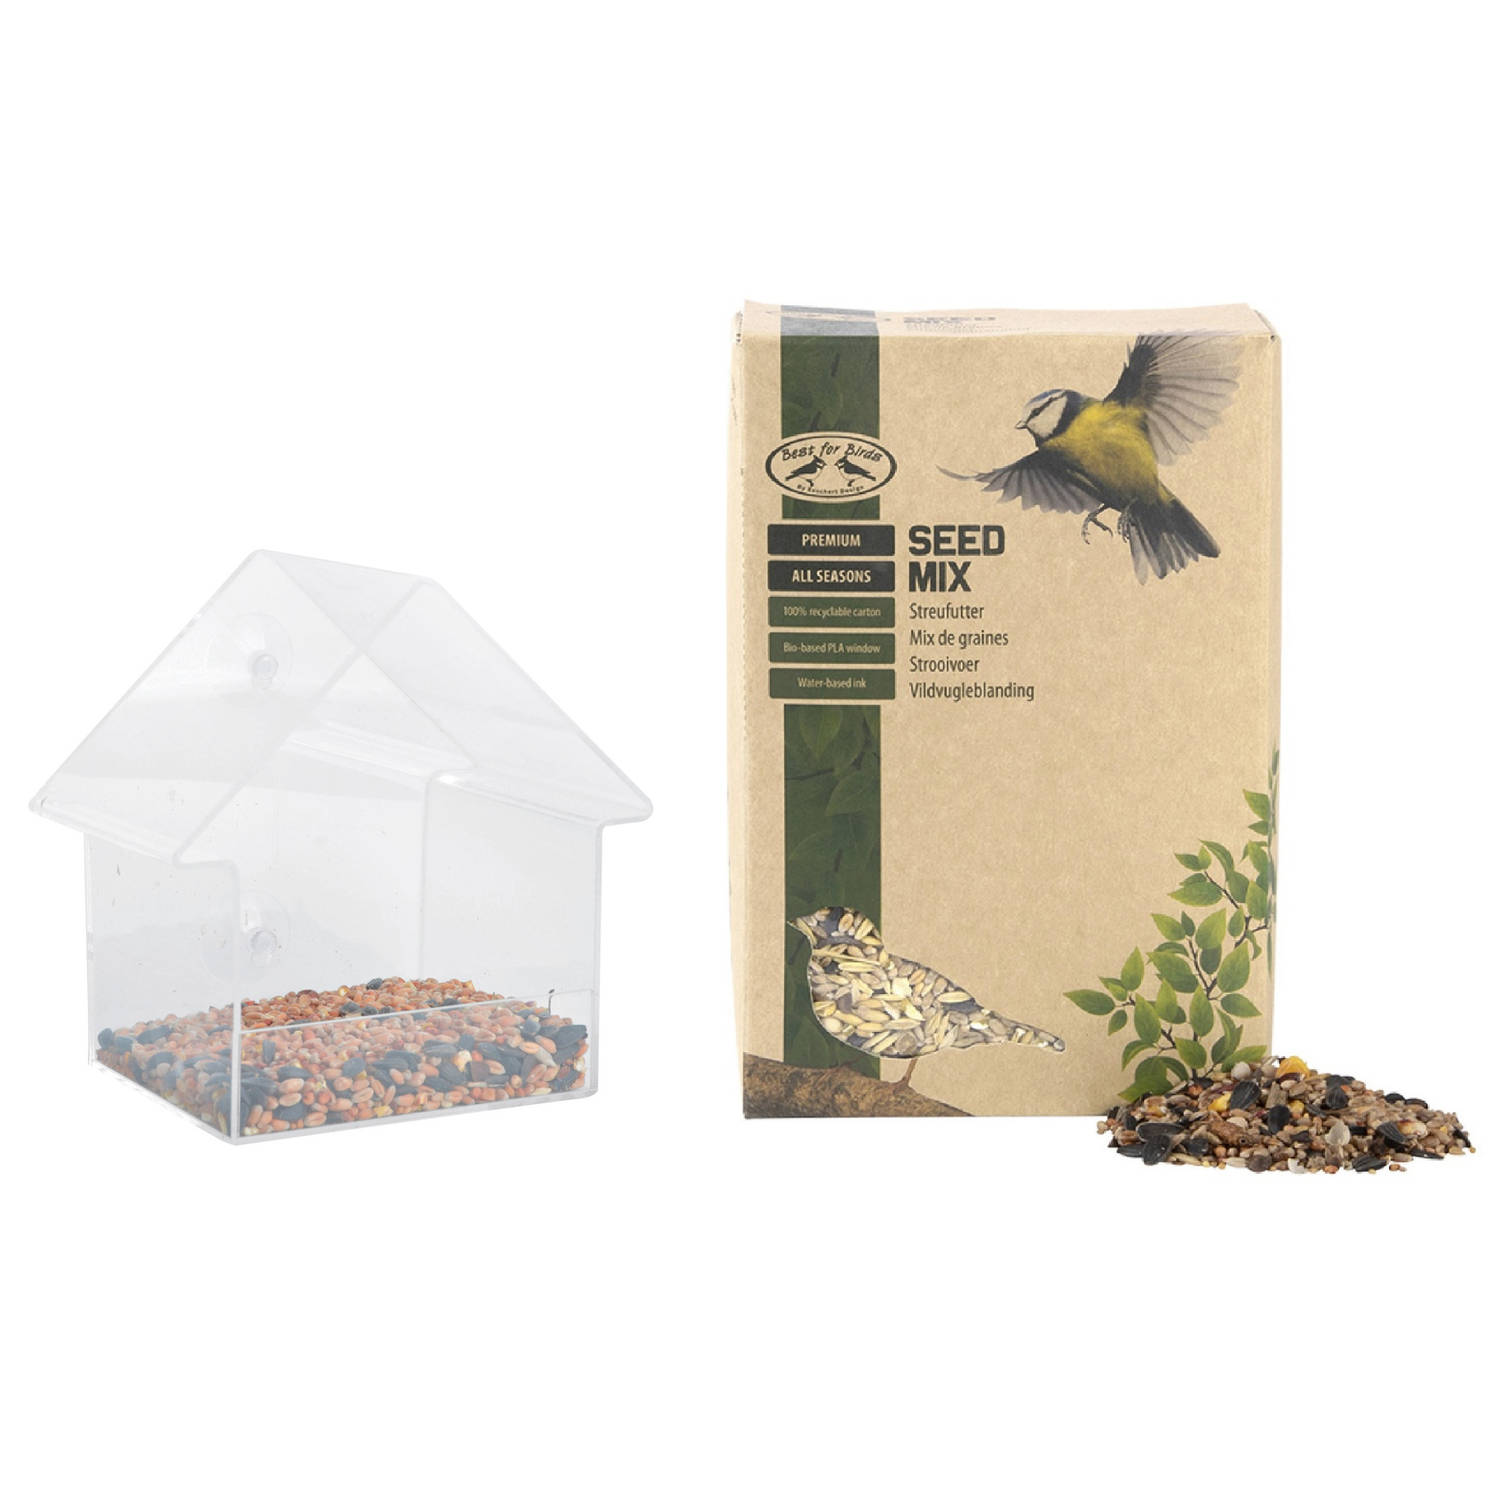 Kunststof vogel raamvoederhuis/voedersilo transparant 15 cm met 2.5 kilo vogelvoer - Vogelvoederhuisjes